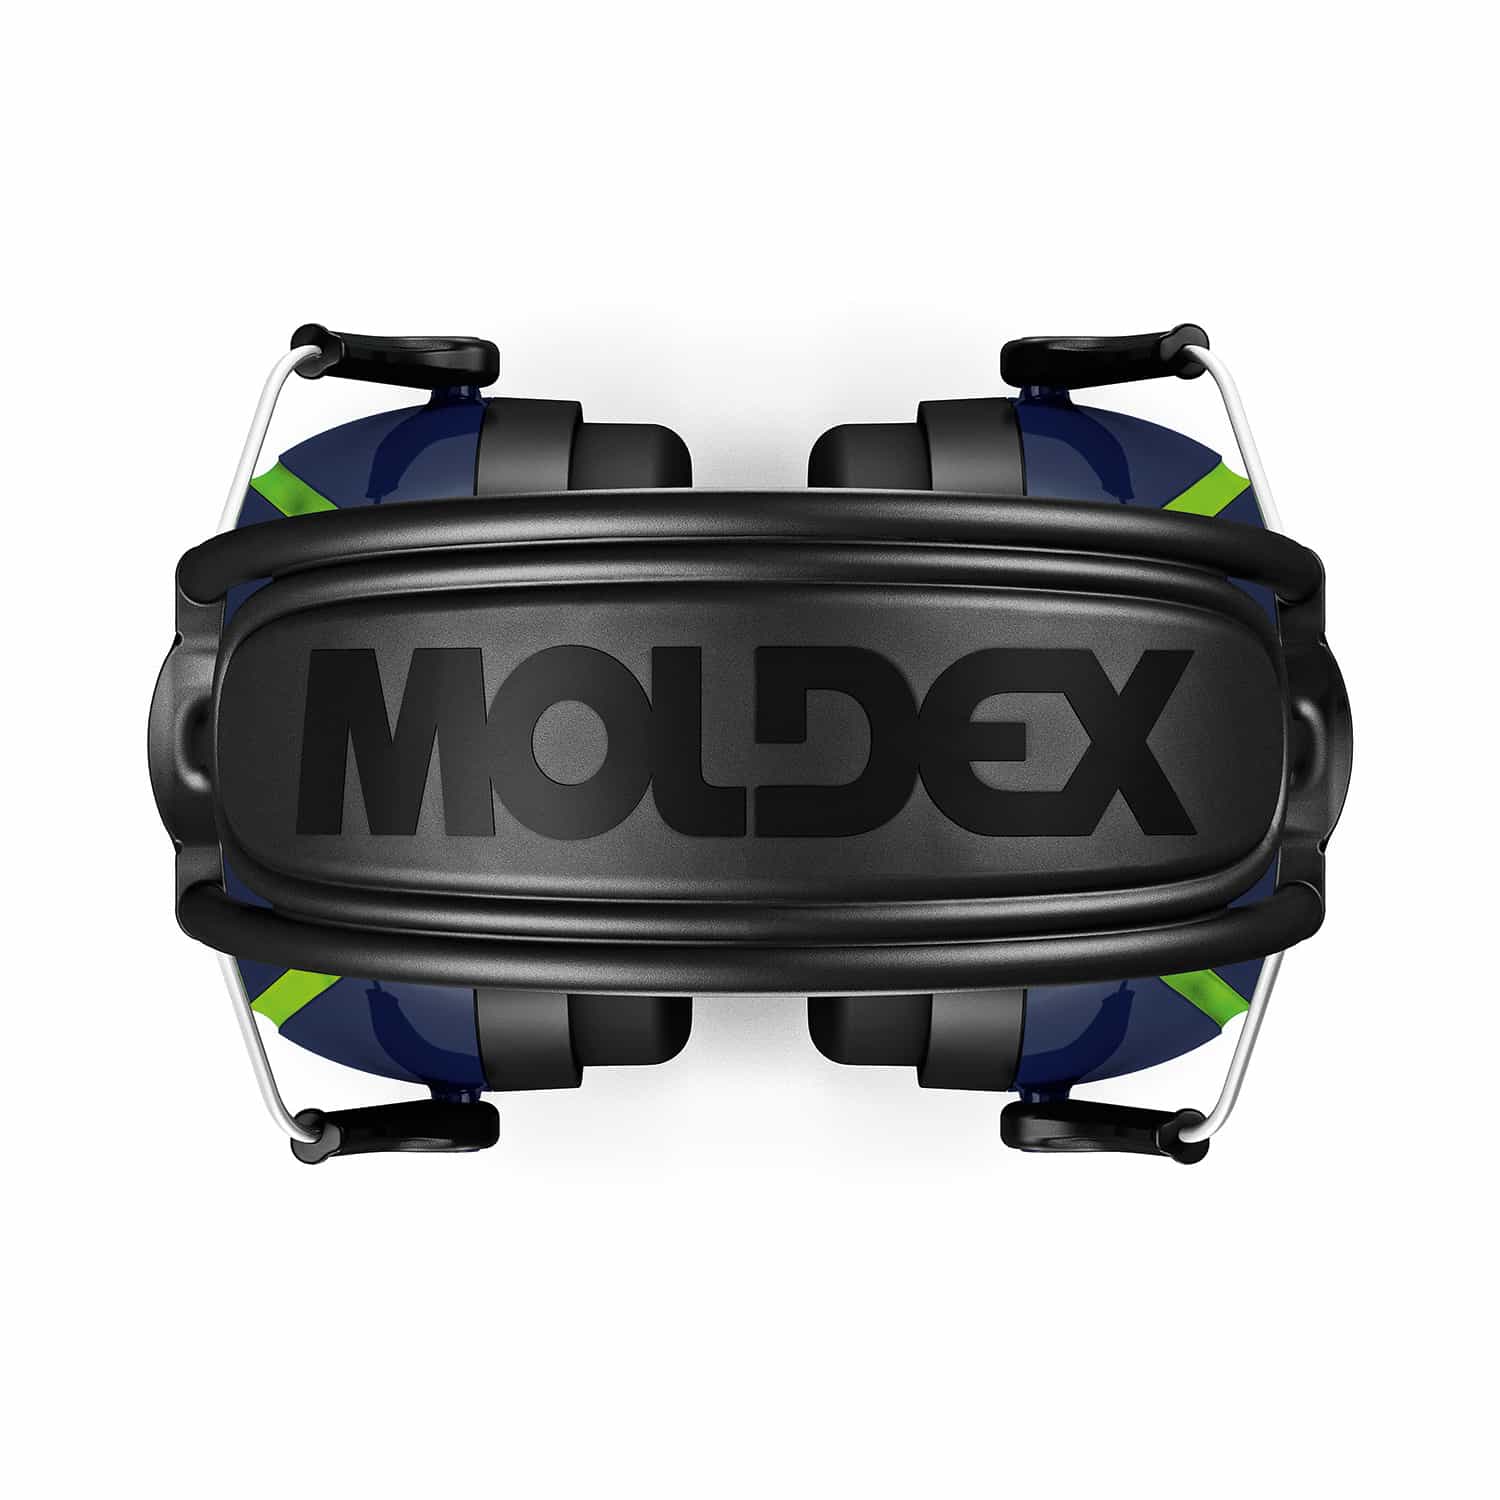 Moldex Mx‐5 Hearing Protection Earmuff, Nrr 27 Ear Defenders